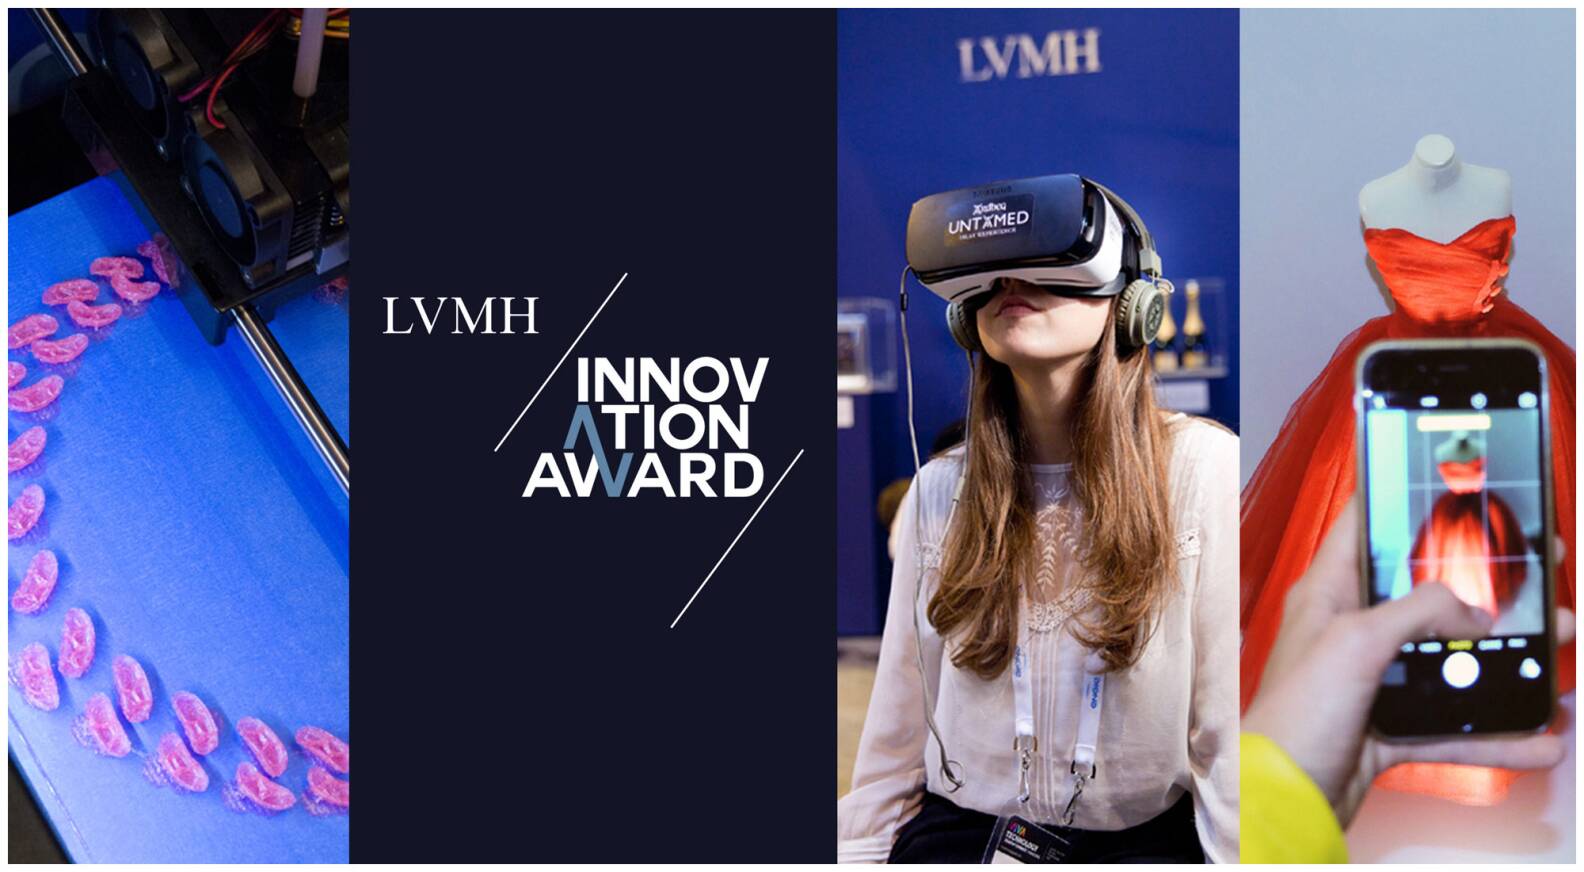 LVMH launches the LVMH Innovation Award at Viva Technology 2017